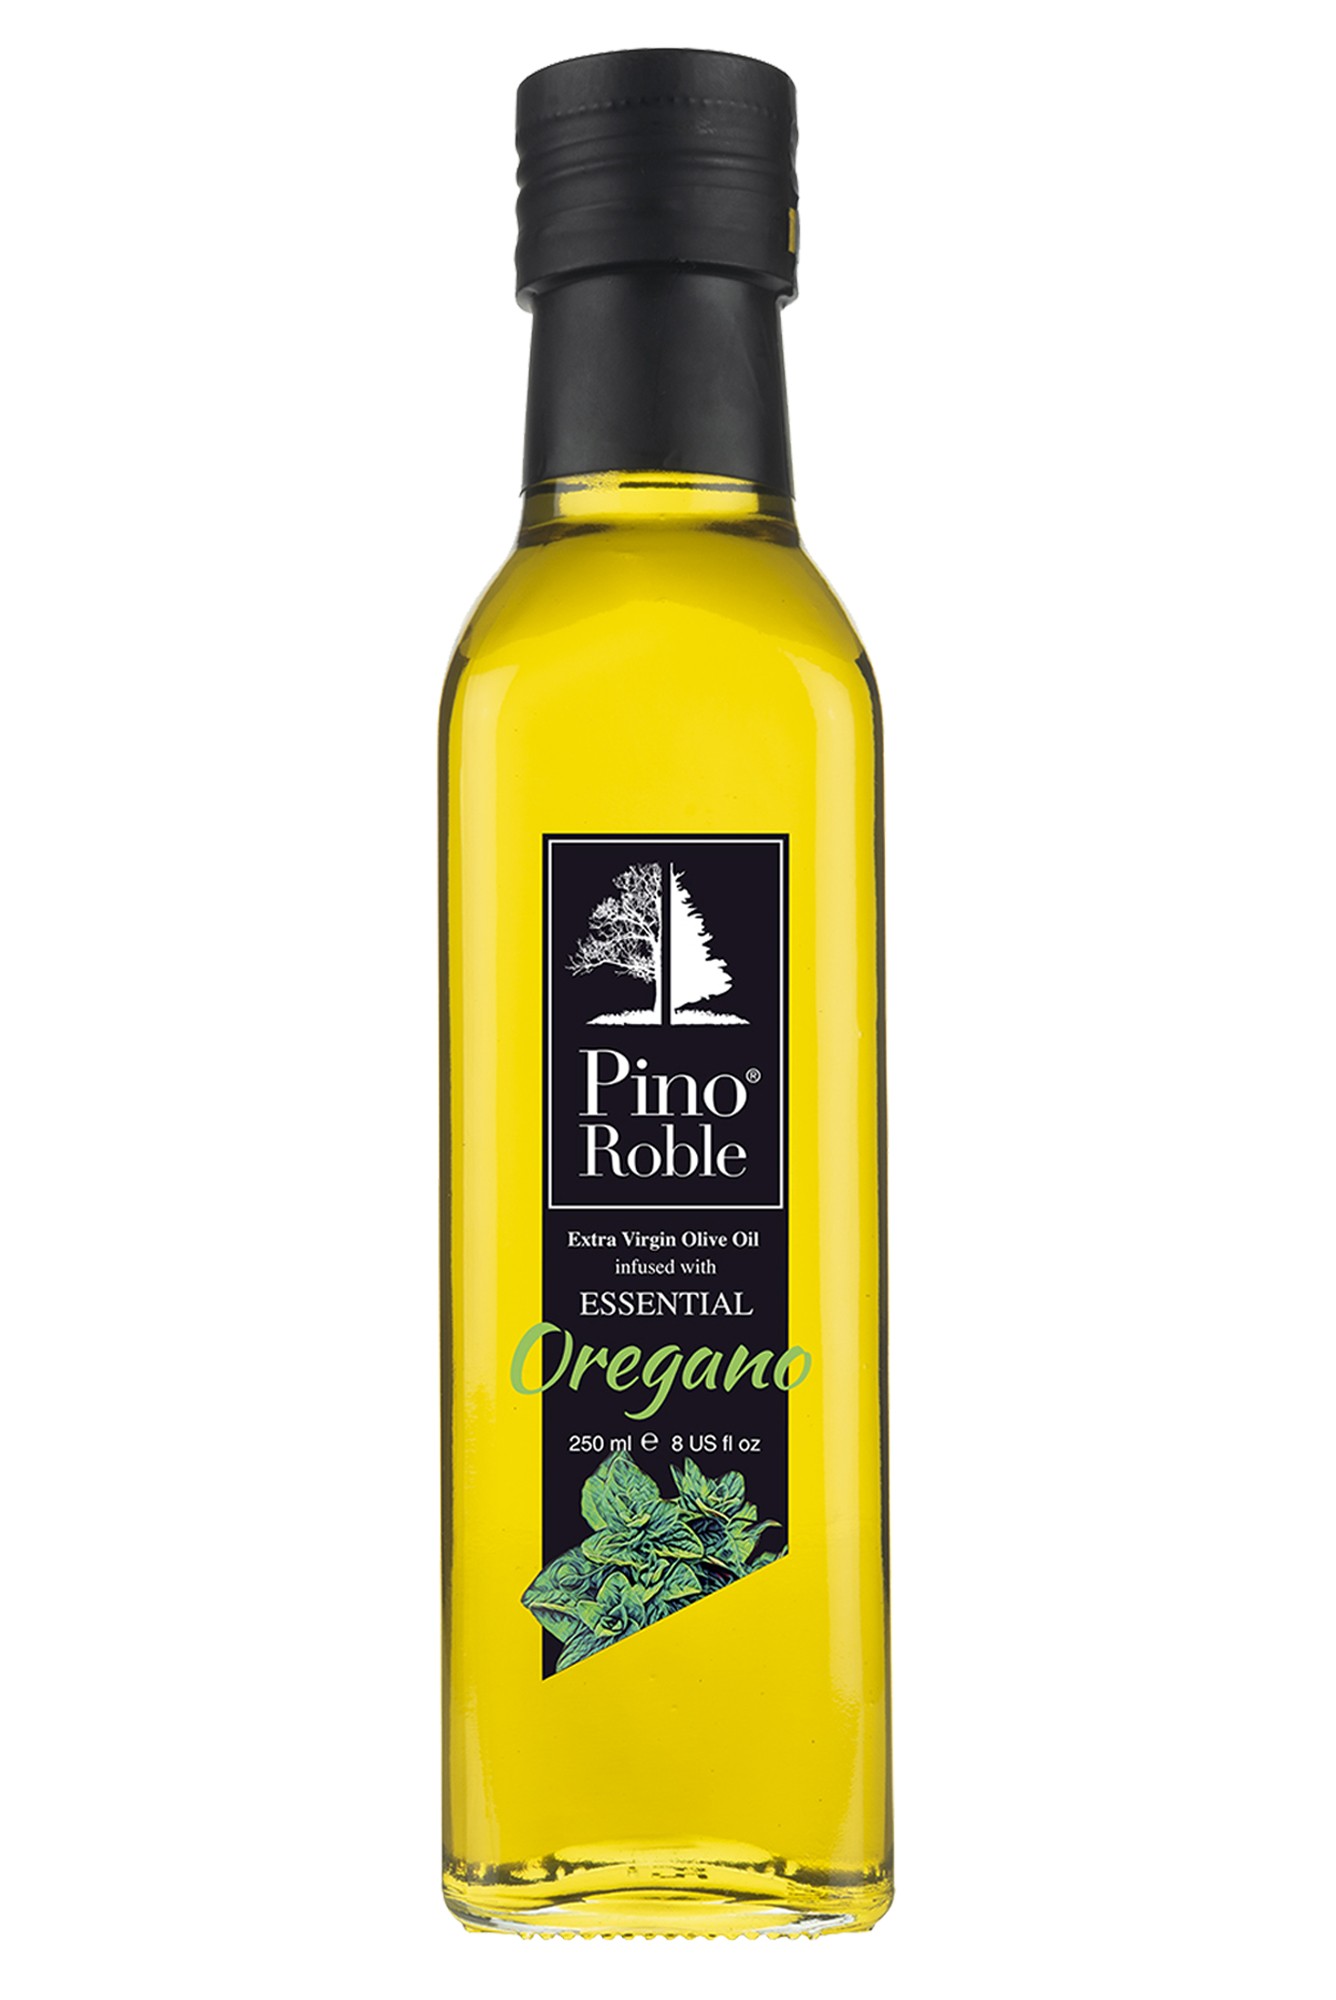 PinoRoble Natives Olivenöl Extra mit Oregano infundiert 250 ml